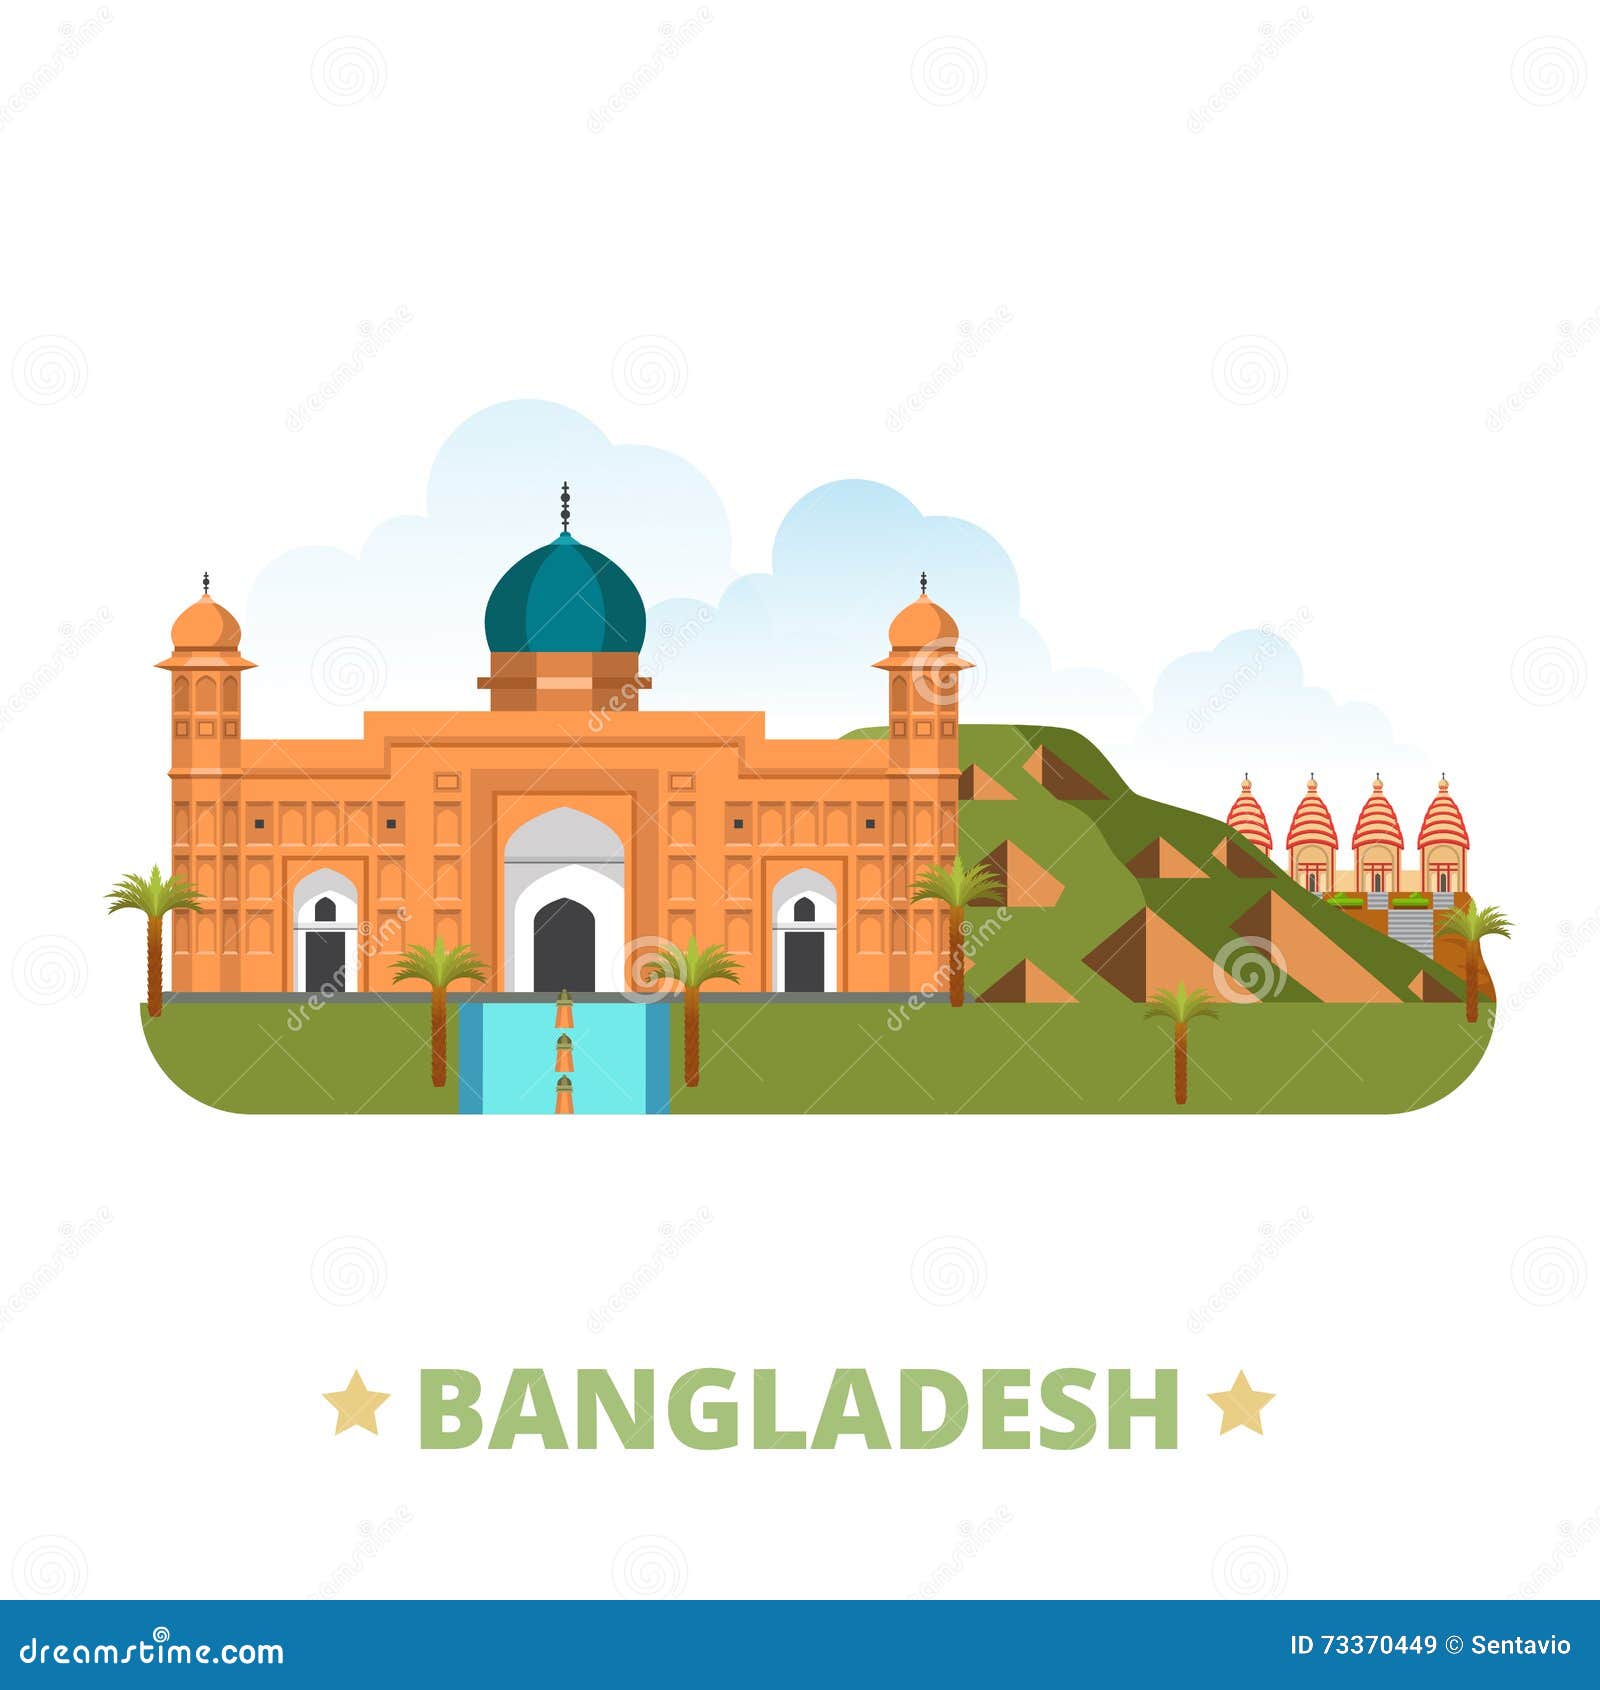 bangladesh country  template flat cartoon st